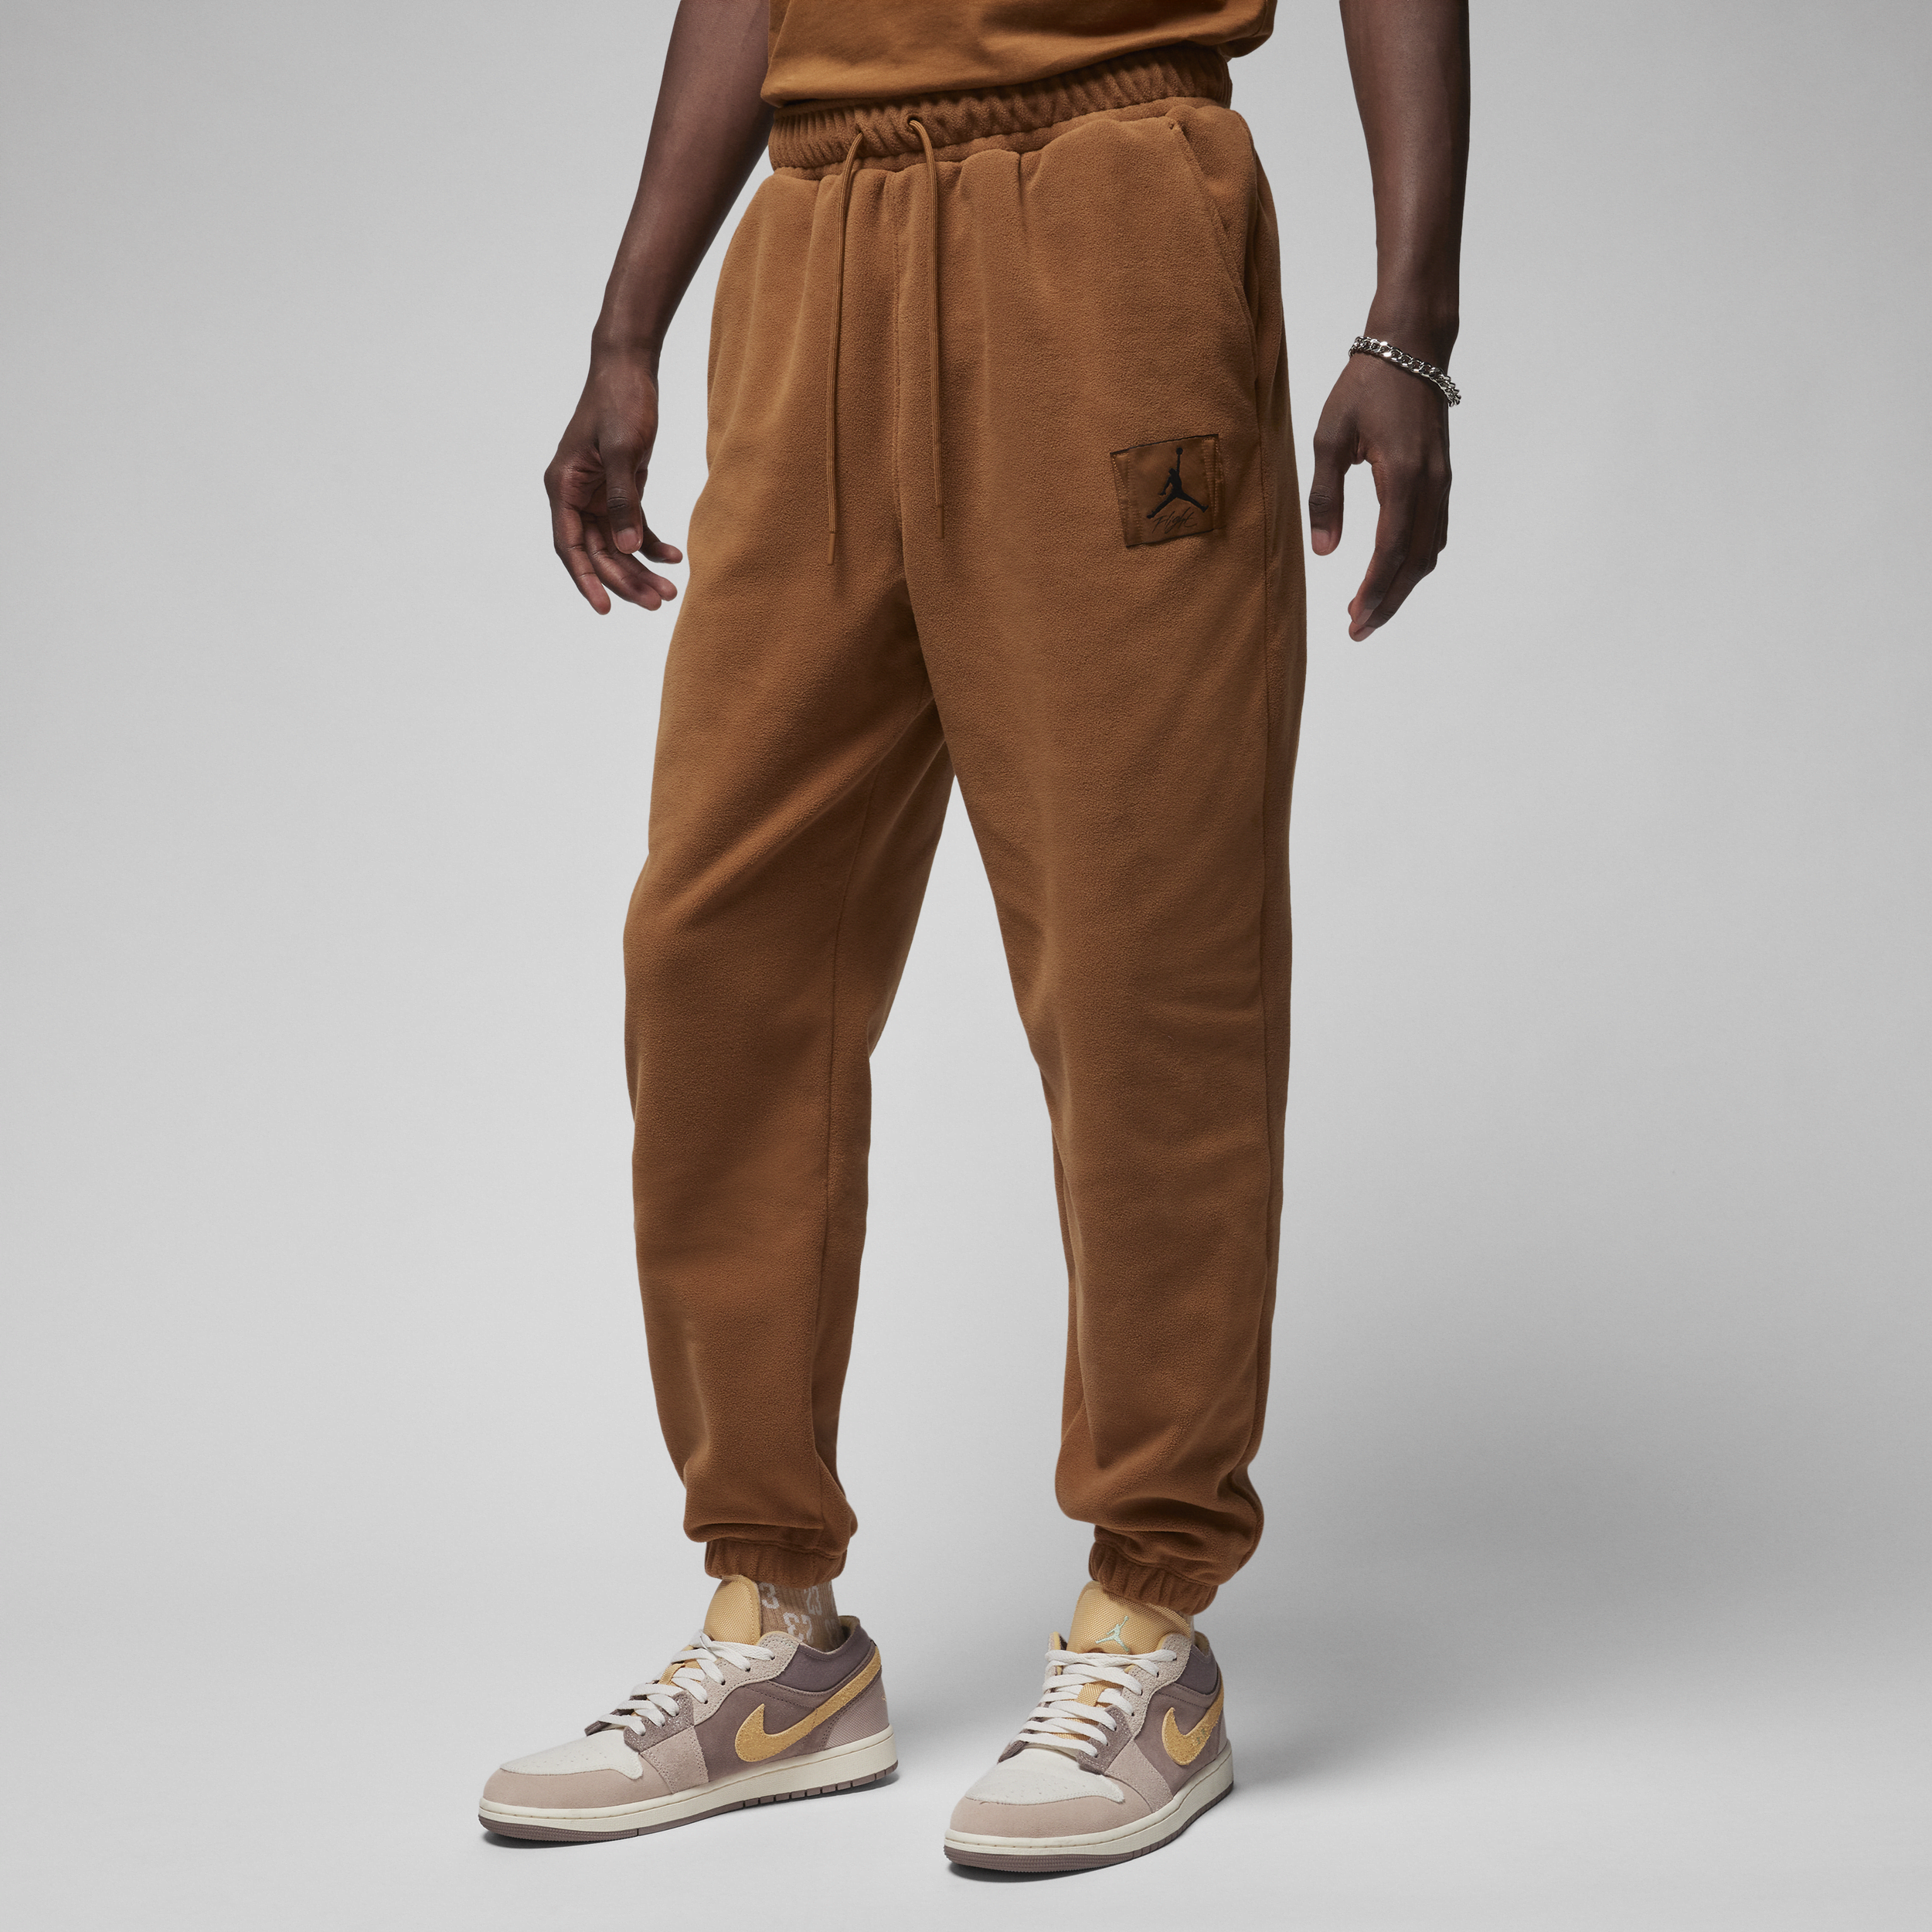 Nike Pantaloni in fleece per l'inverno Jordan Essentials – Uomo - Marrone